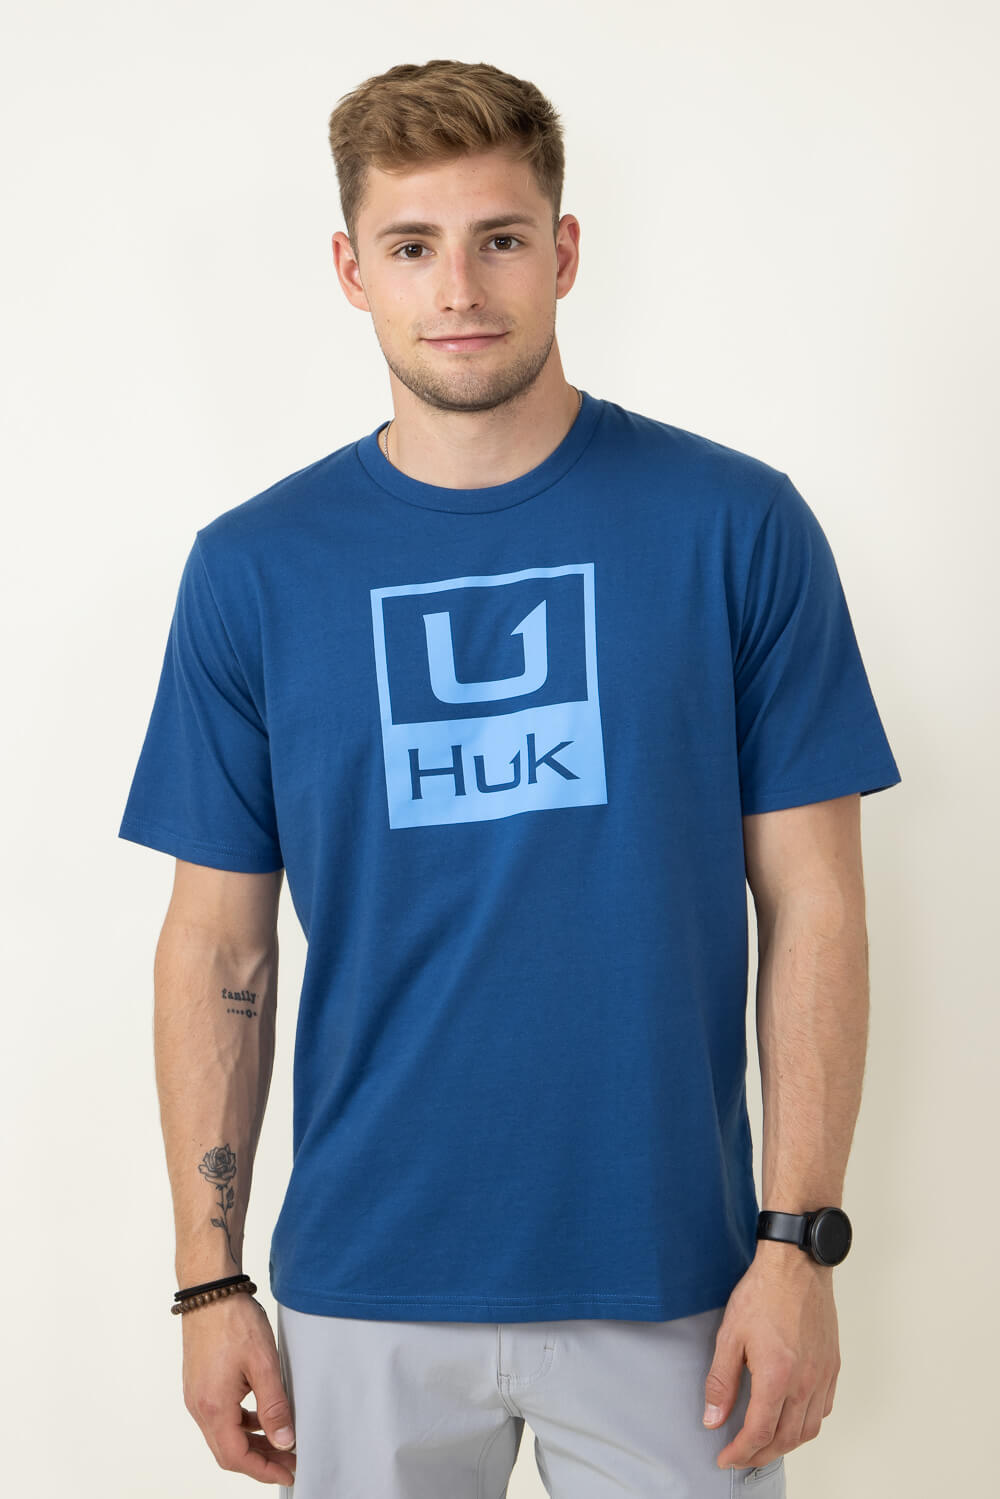 Huk Fishing Huk Stacked Logo T-Shirt for Men in Navy Blue